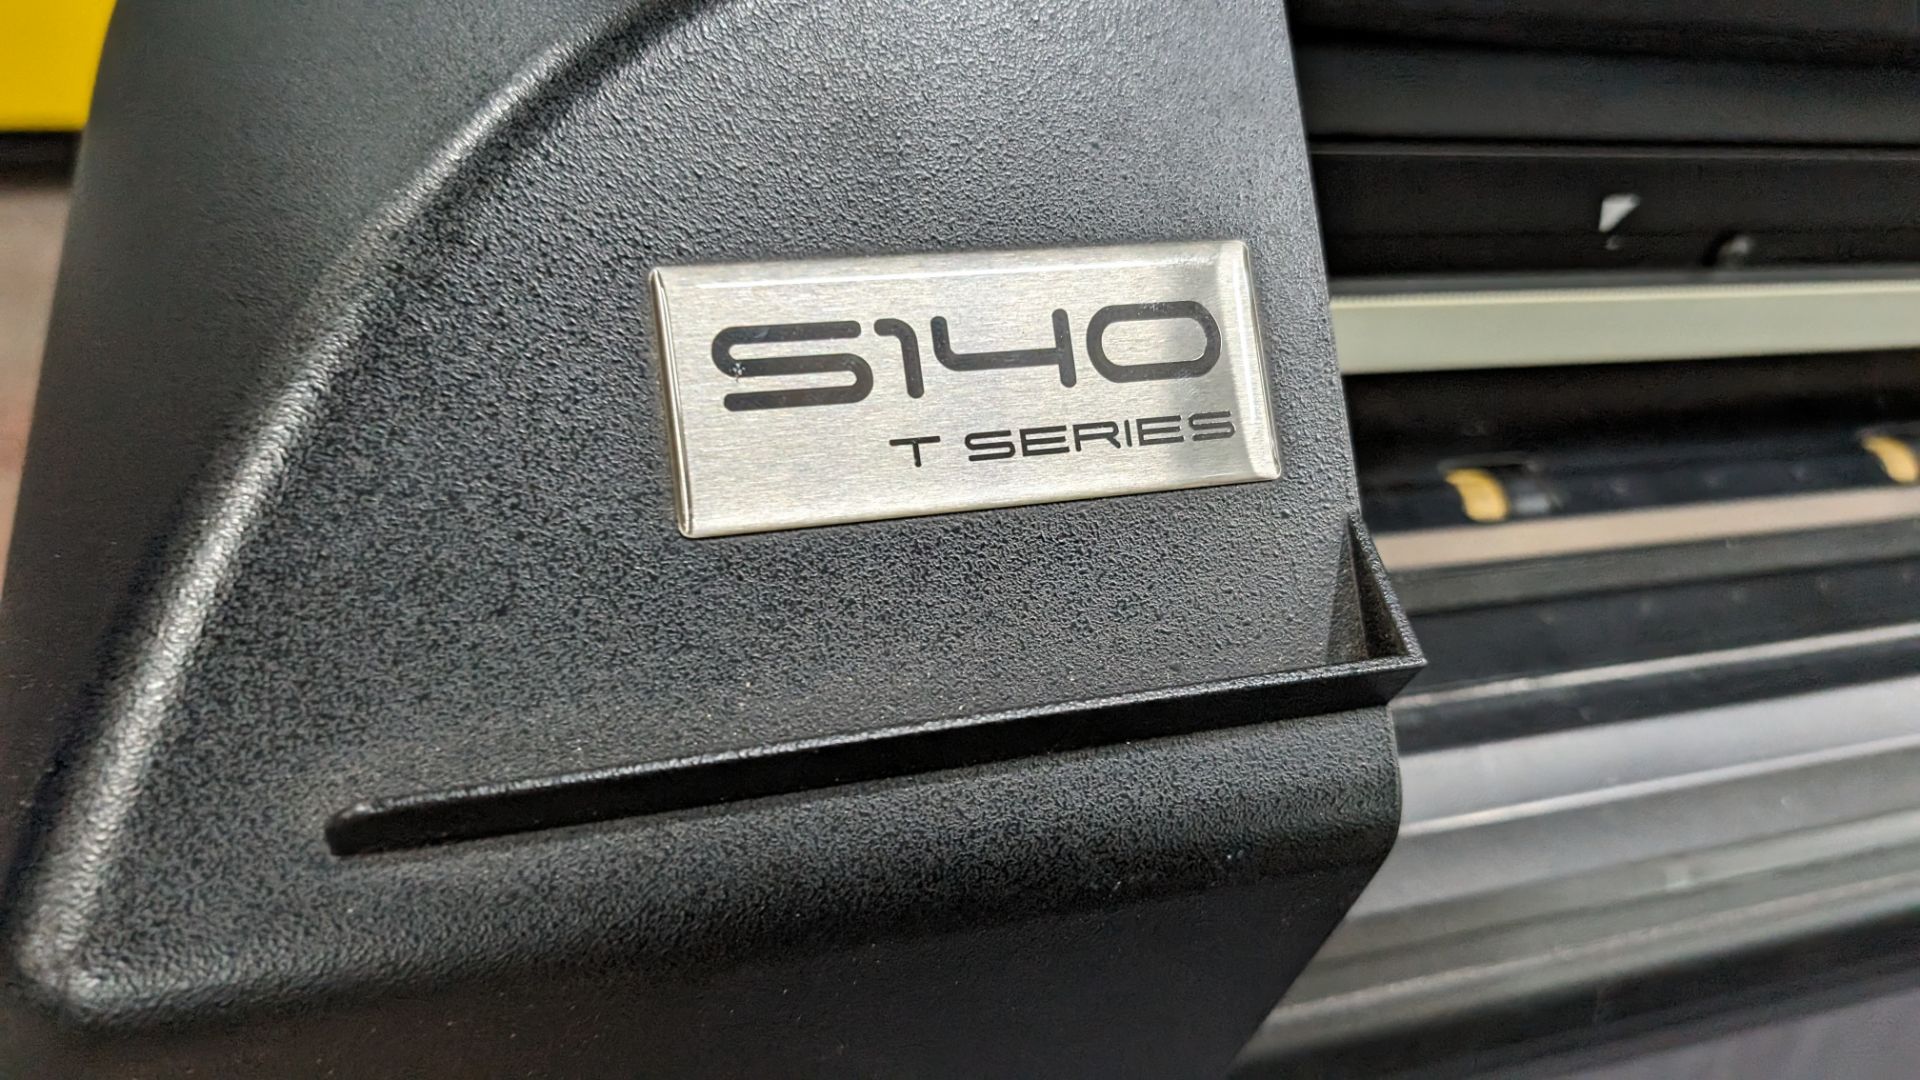 Summa S140 T-series vinyl cutter, 1400mm capacity - Image 10 of 11